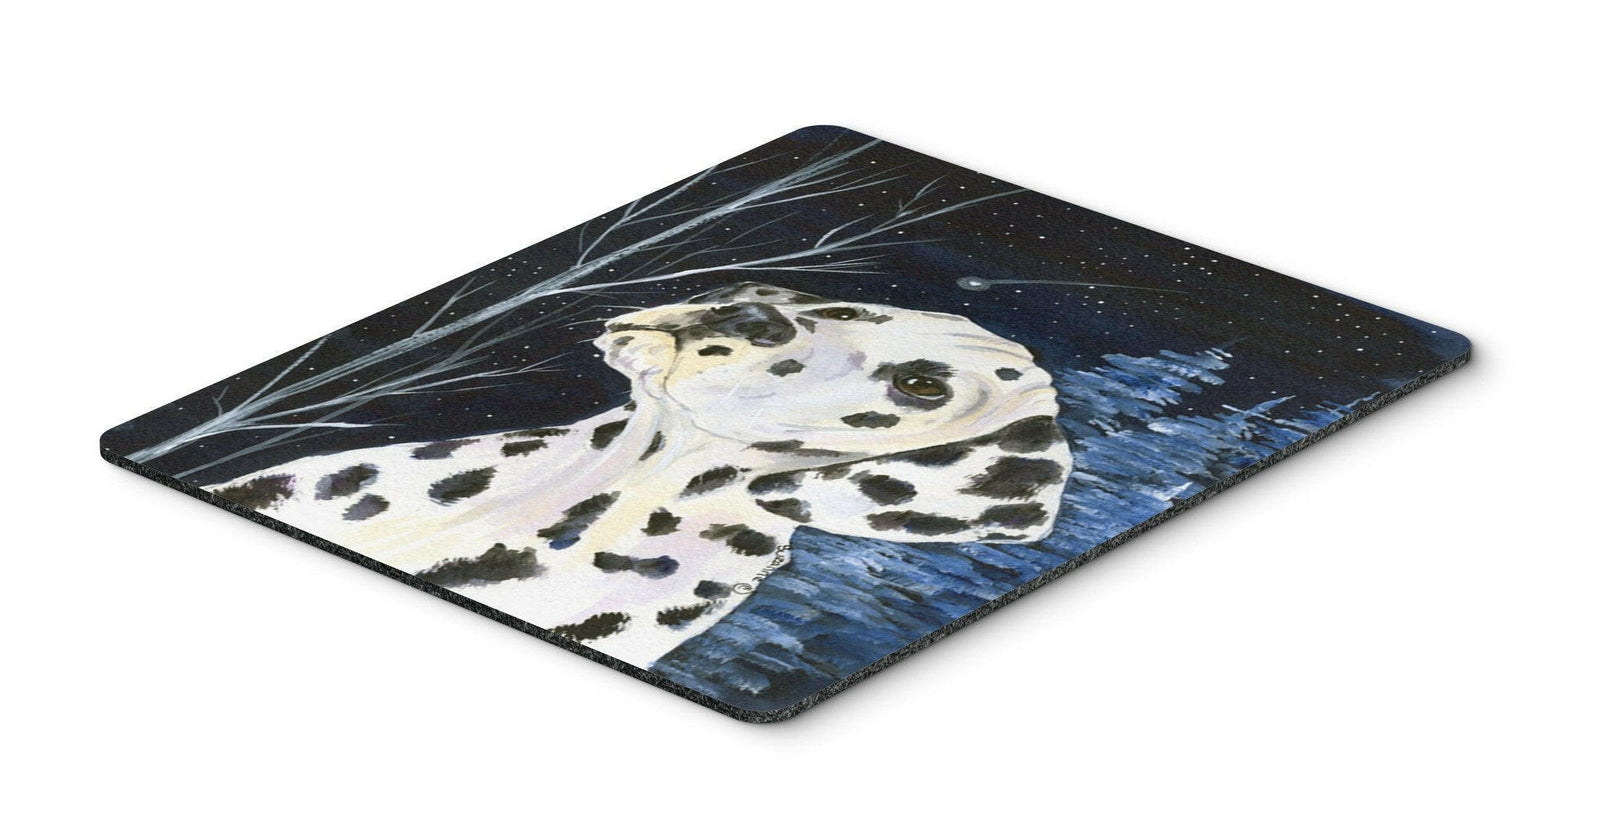 Starry Night Dalmatian Mouse Pad / Hot Pad / Trivet by Caroline's Treasures